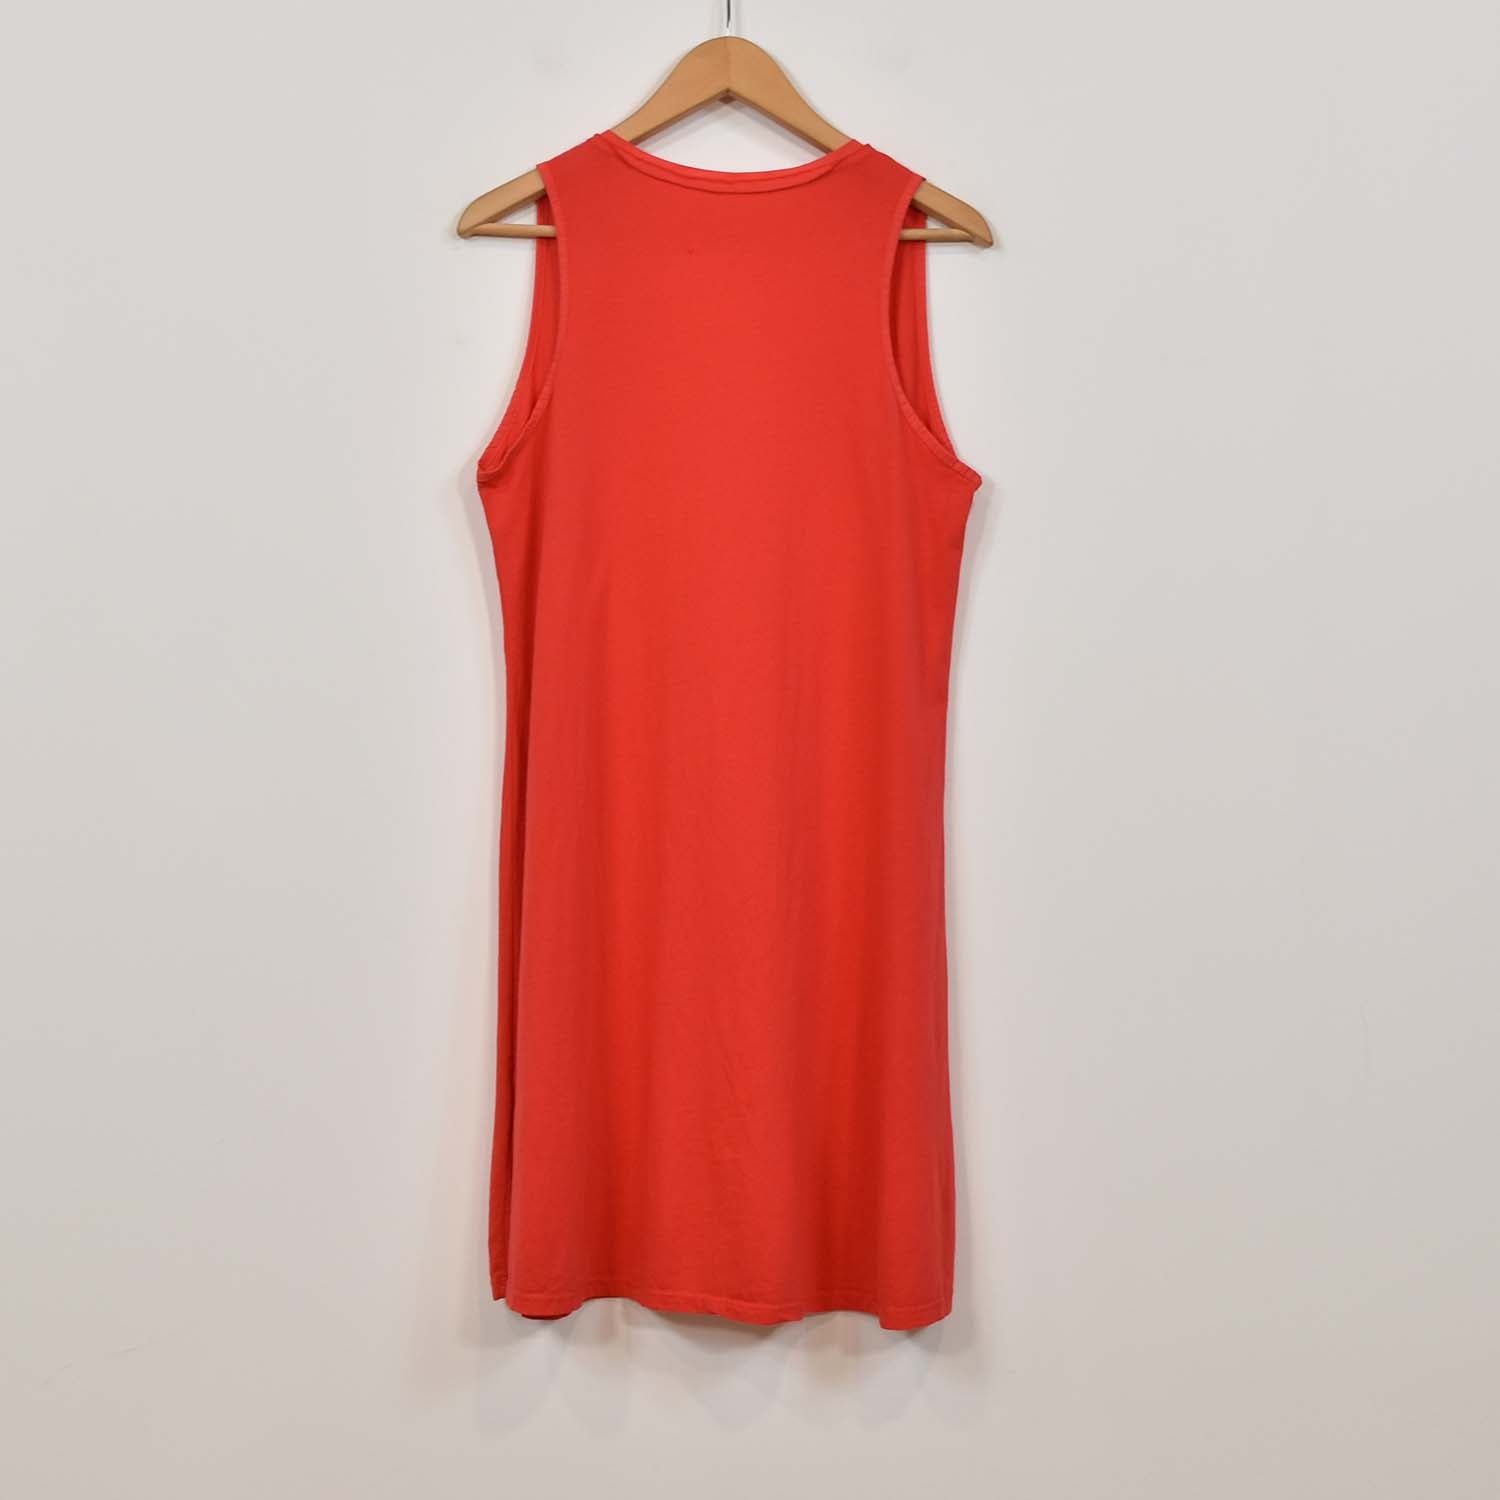 Red short frayed dress